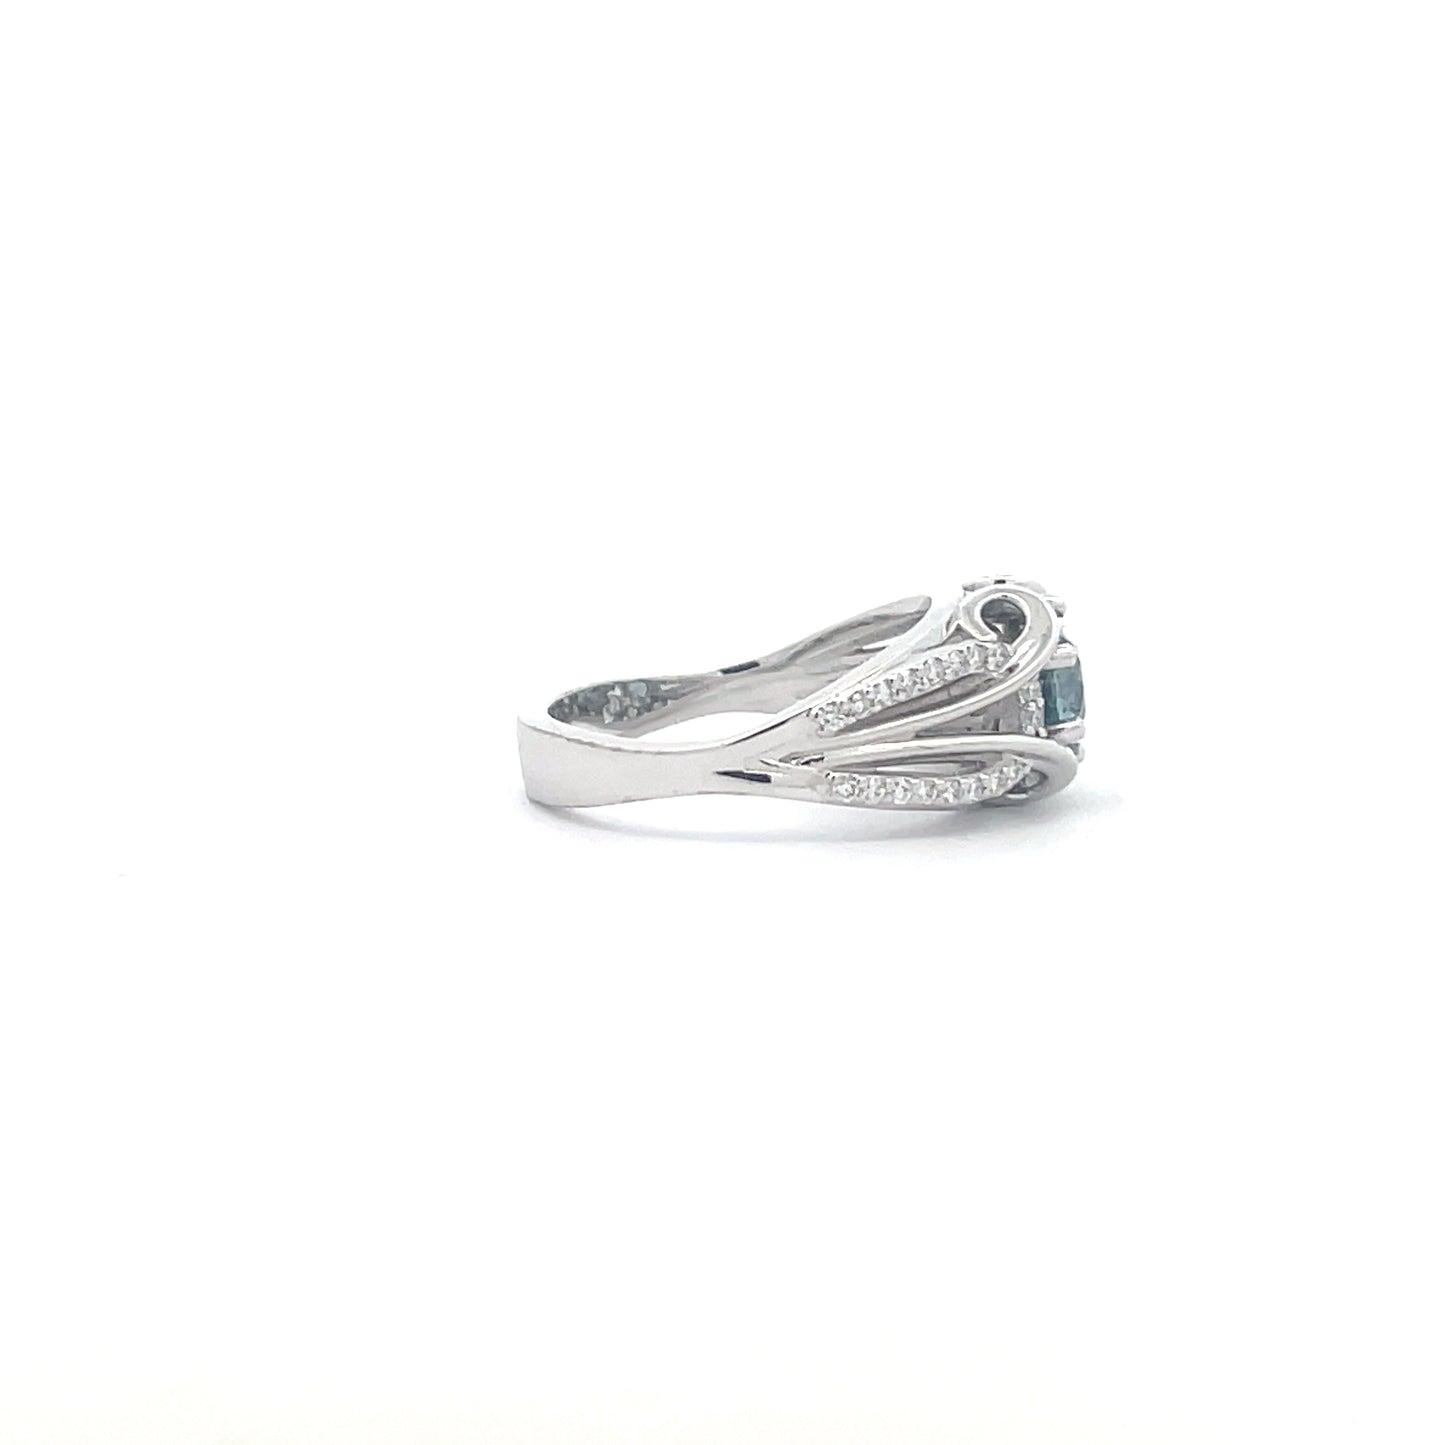 MT sapphire- 1.08 & diamond ring - 14kw ct sapphire- Imagine Original